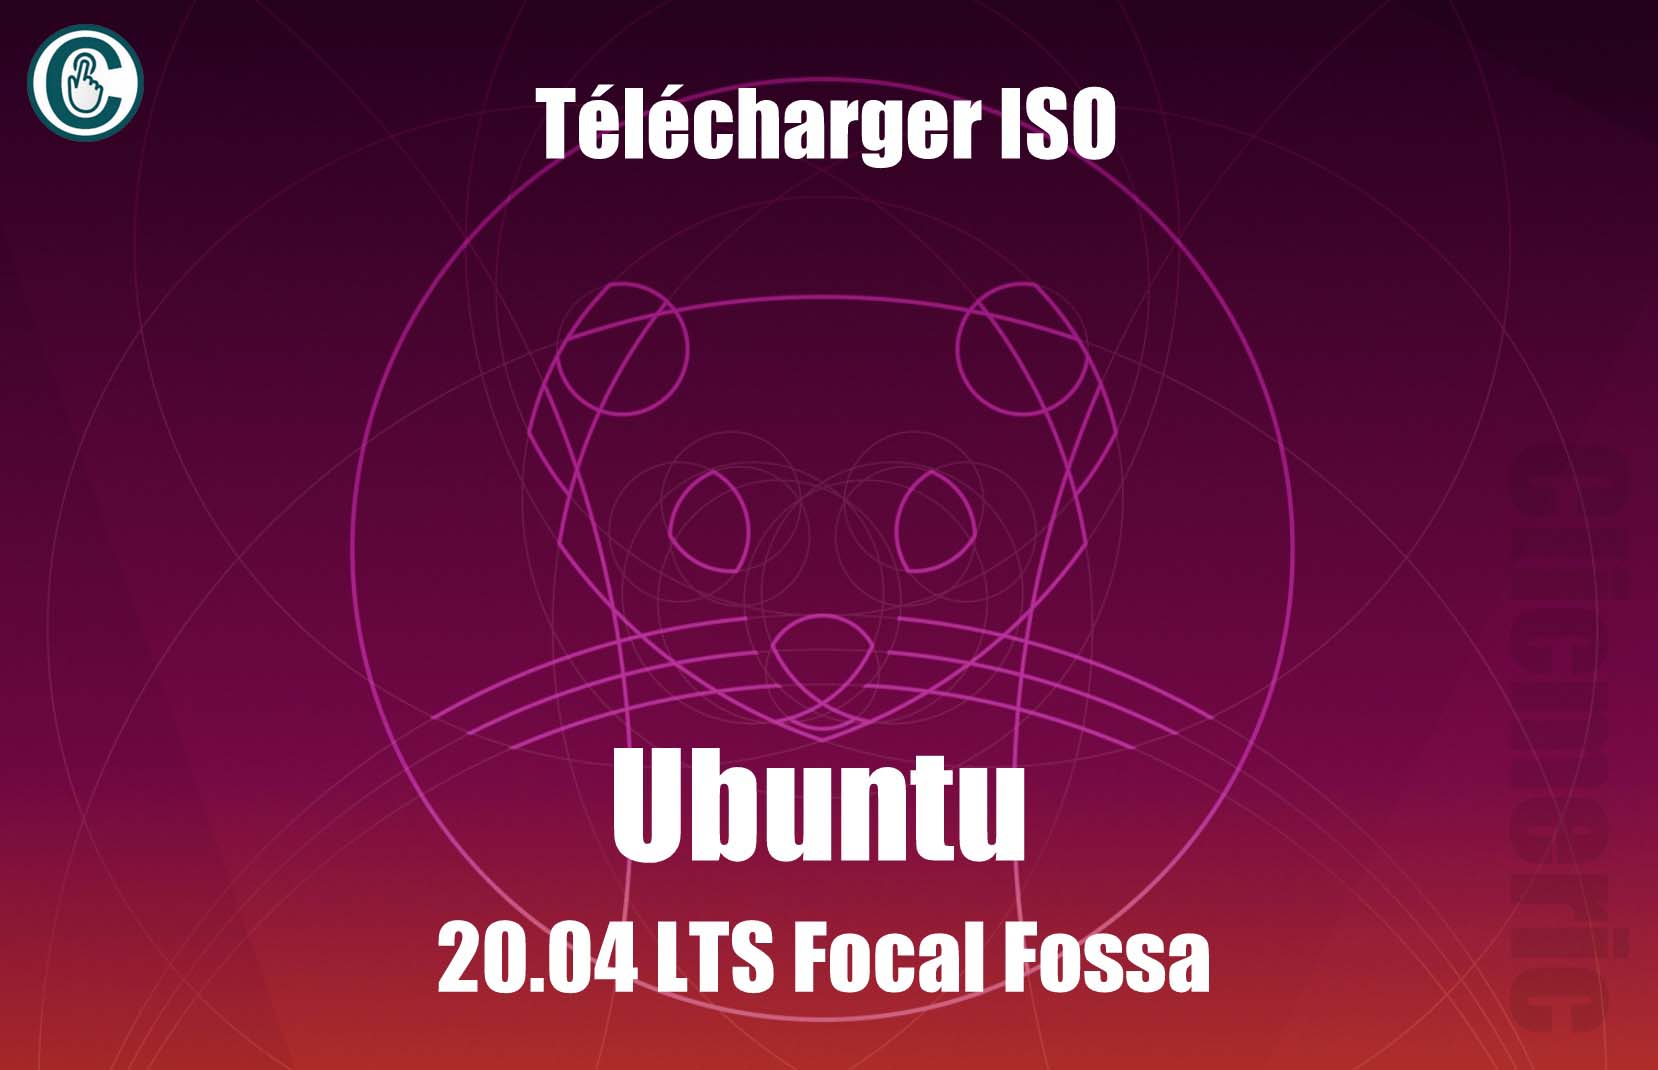 Télécharger ISO Ubuntu 20.04 LTS 64 Bits | Ubuntu 20.04.1 LTS gratuit